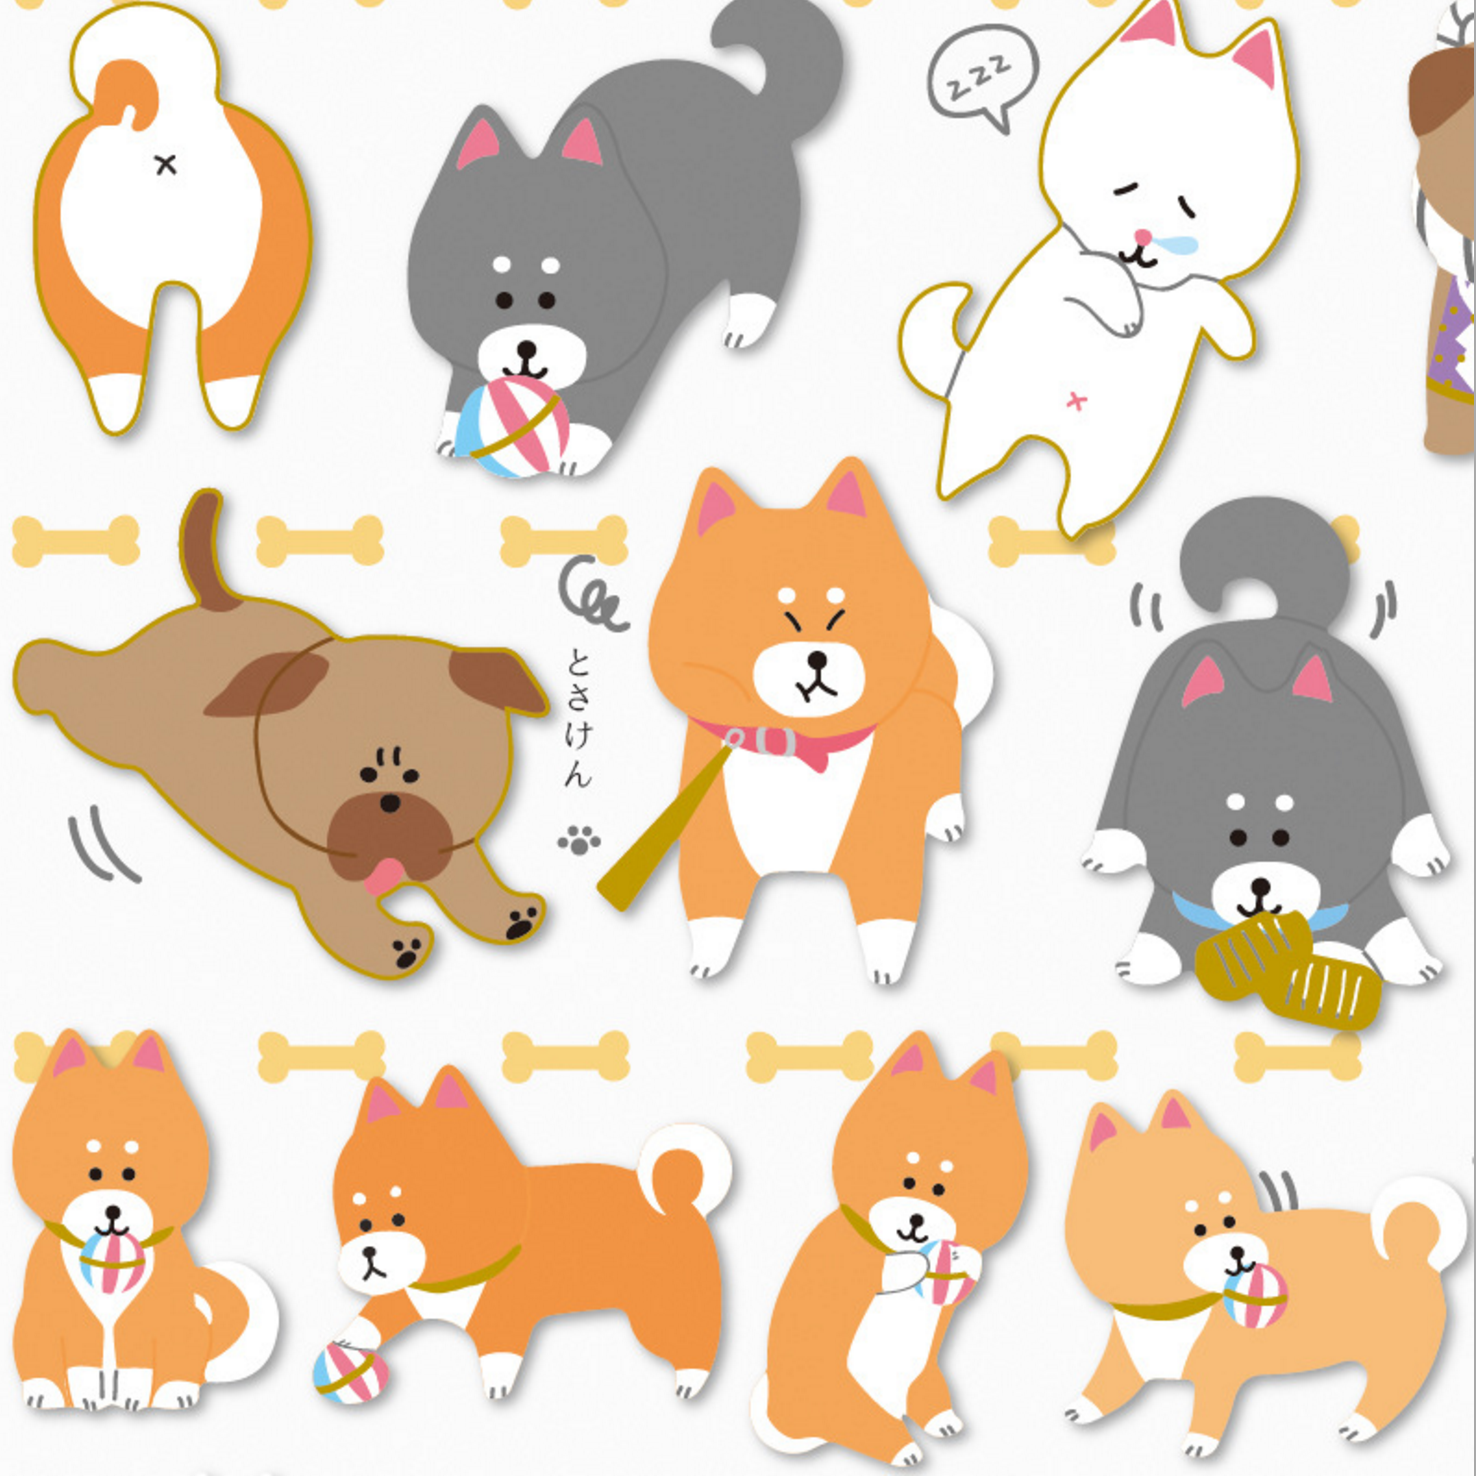 Kawaii Cute Dog Cartoon Images